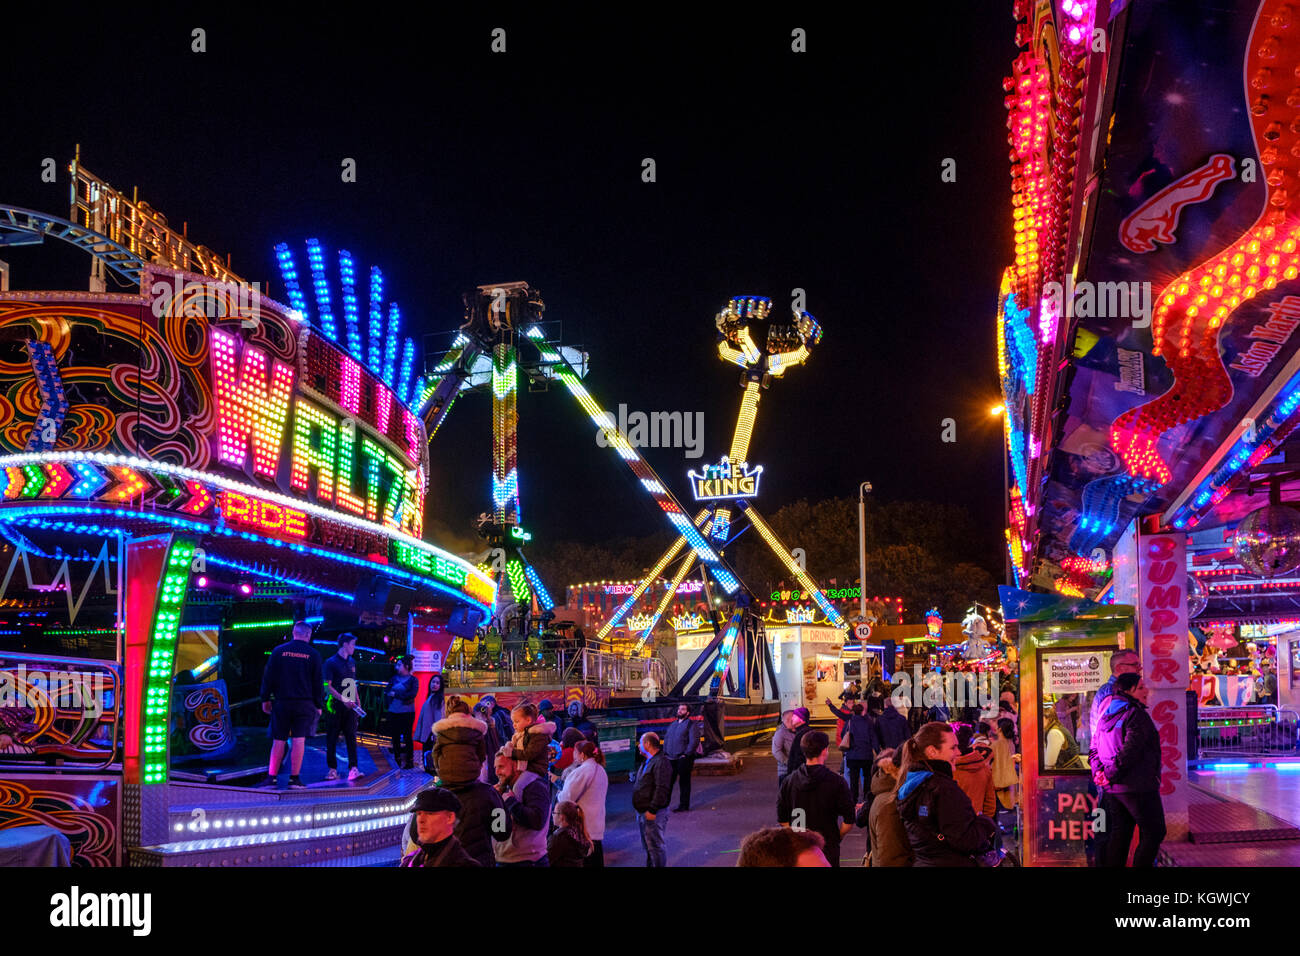 People and fairground rides at night, Goose Fair, Nottingham, England, UK Stock Photo